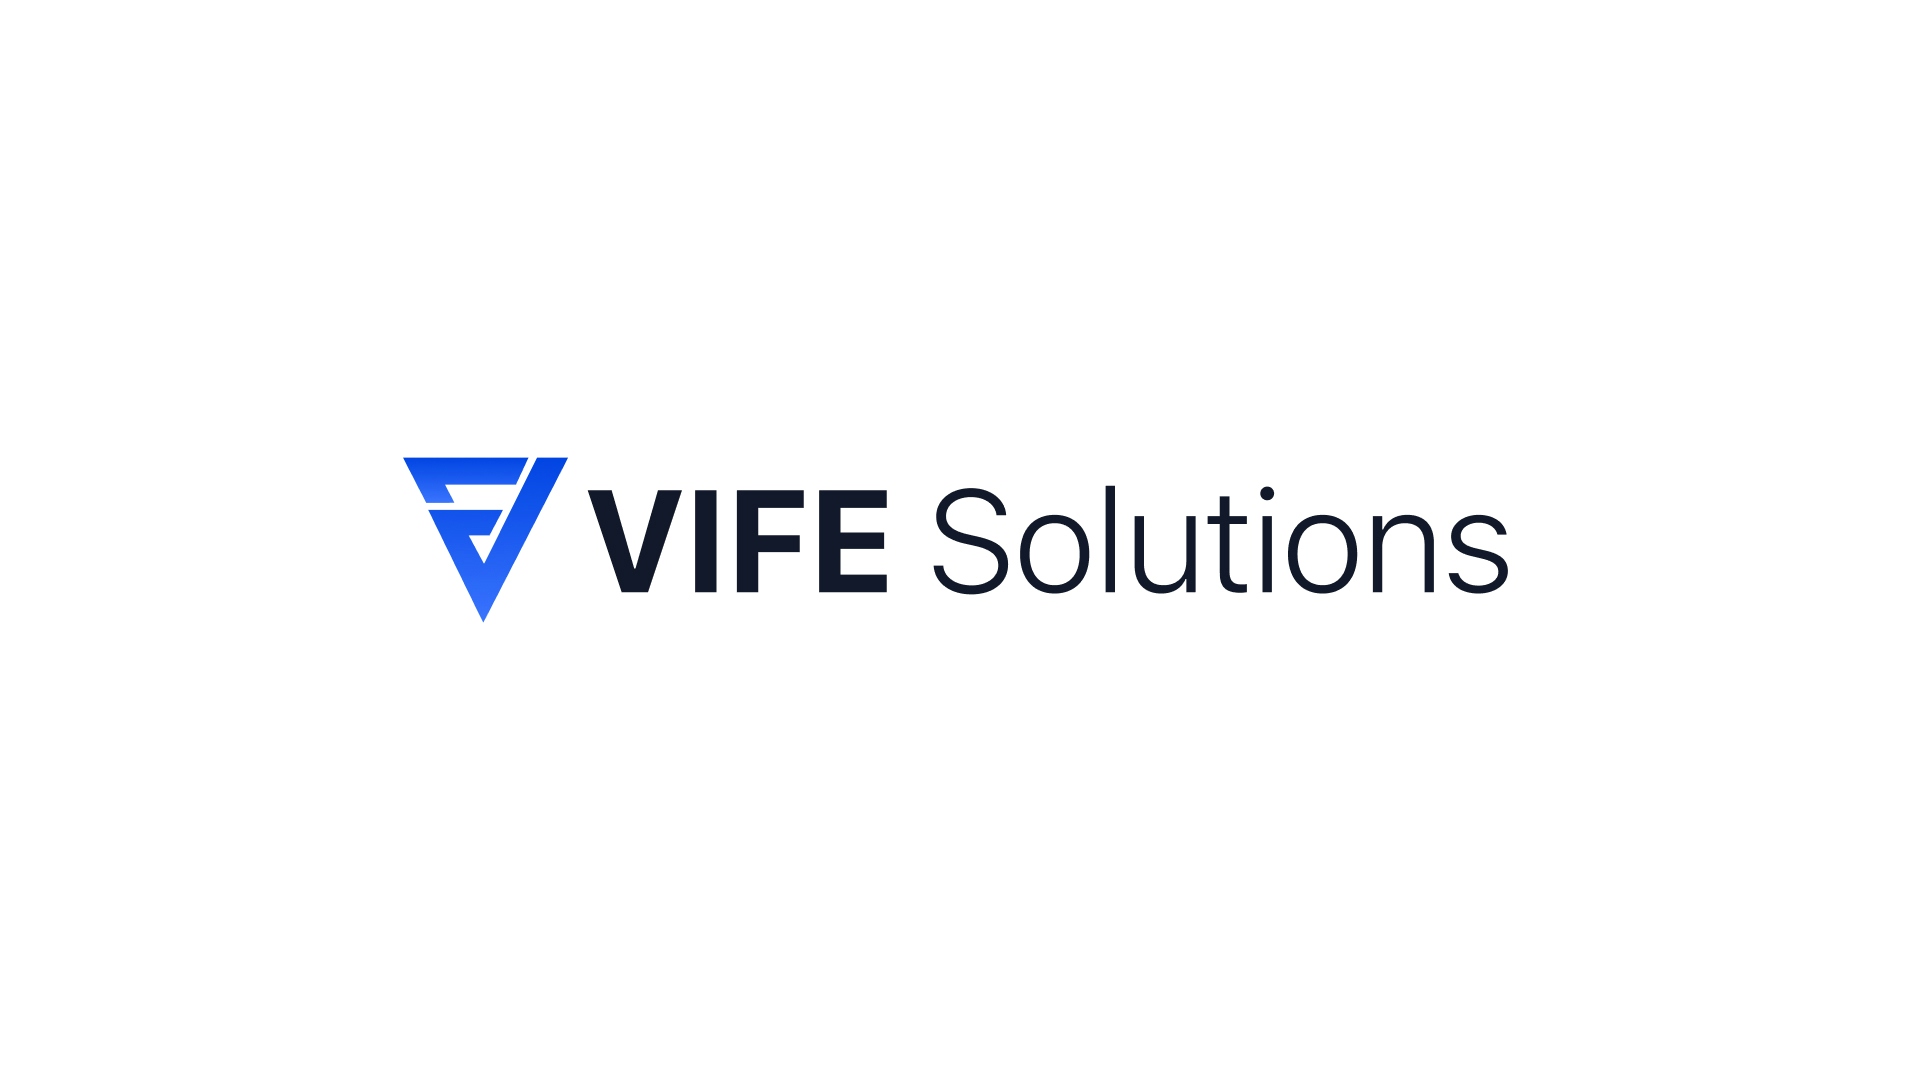 VIFE Solutions